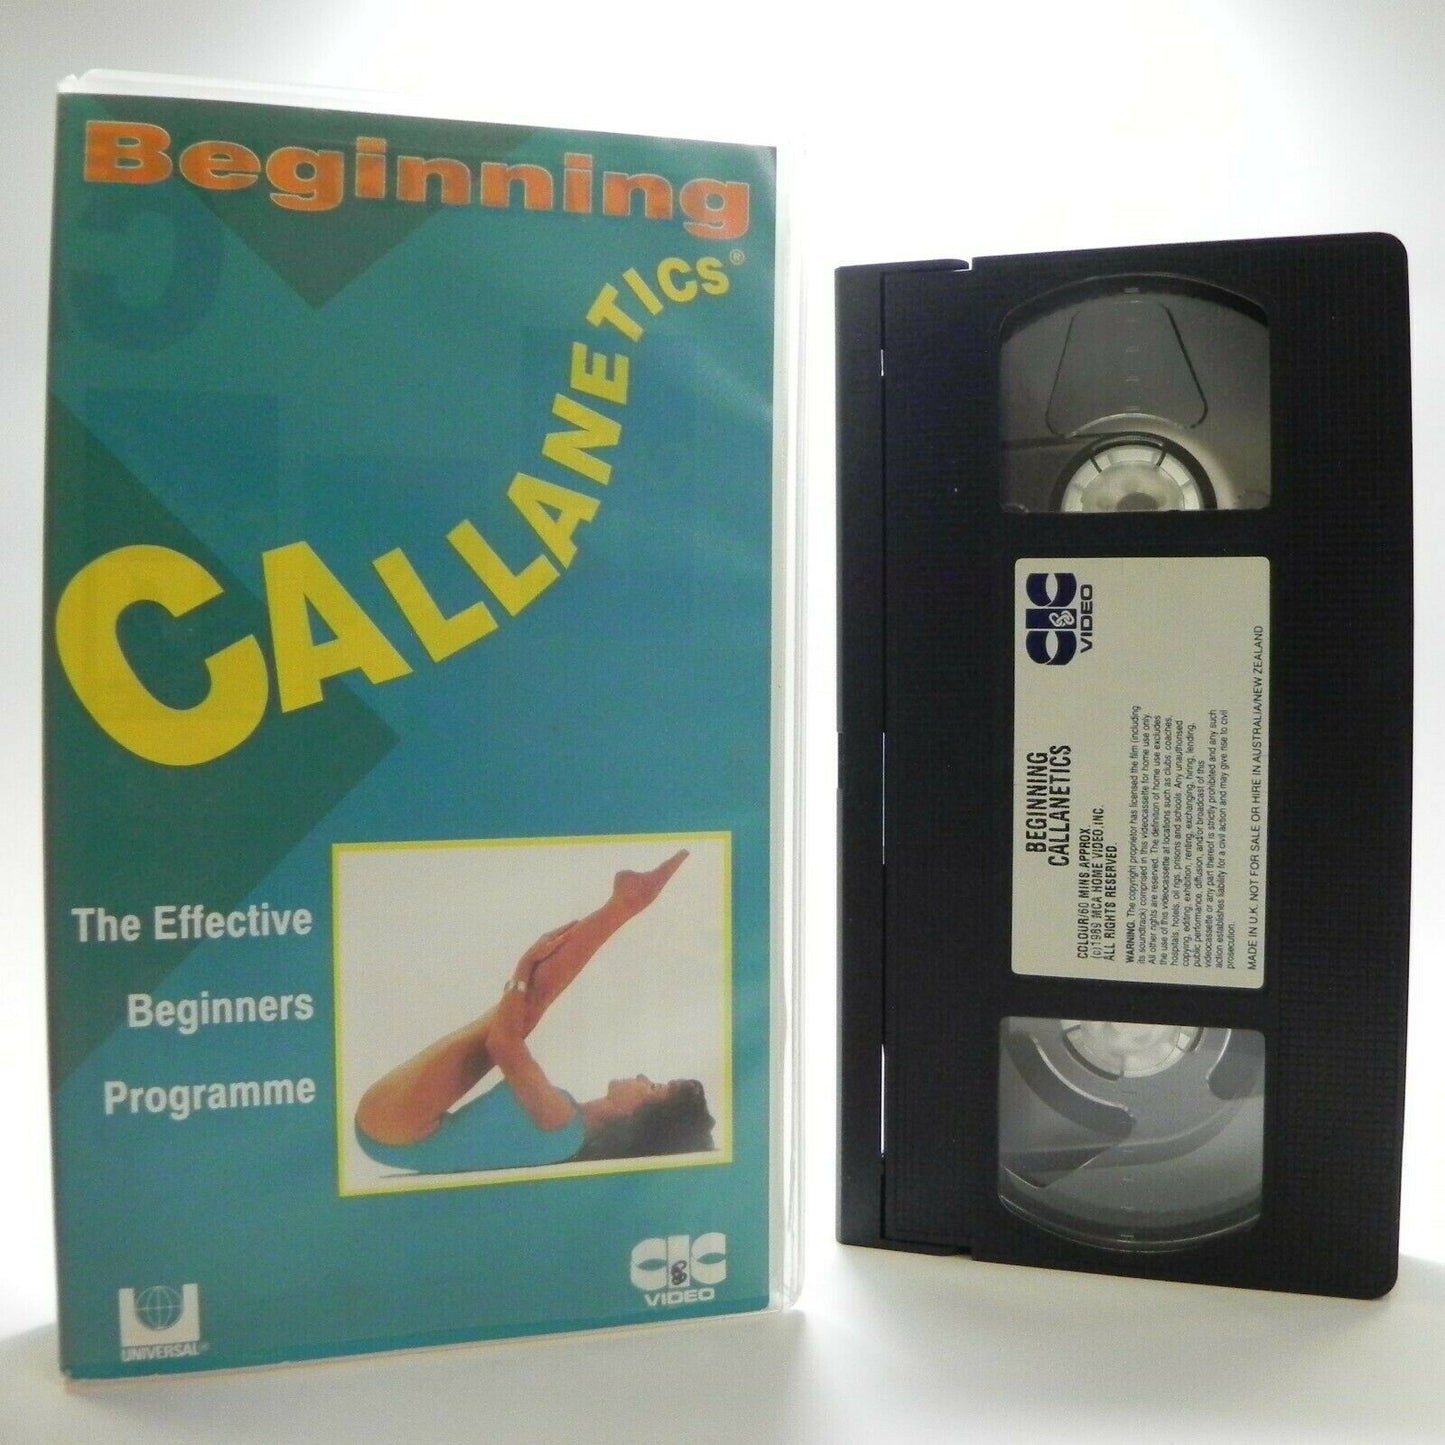 Beginning Callanetics: By C.Pinckney - Effective Programme - Exrecises - Pal VHS-